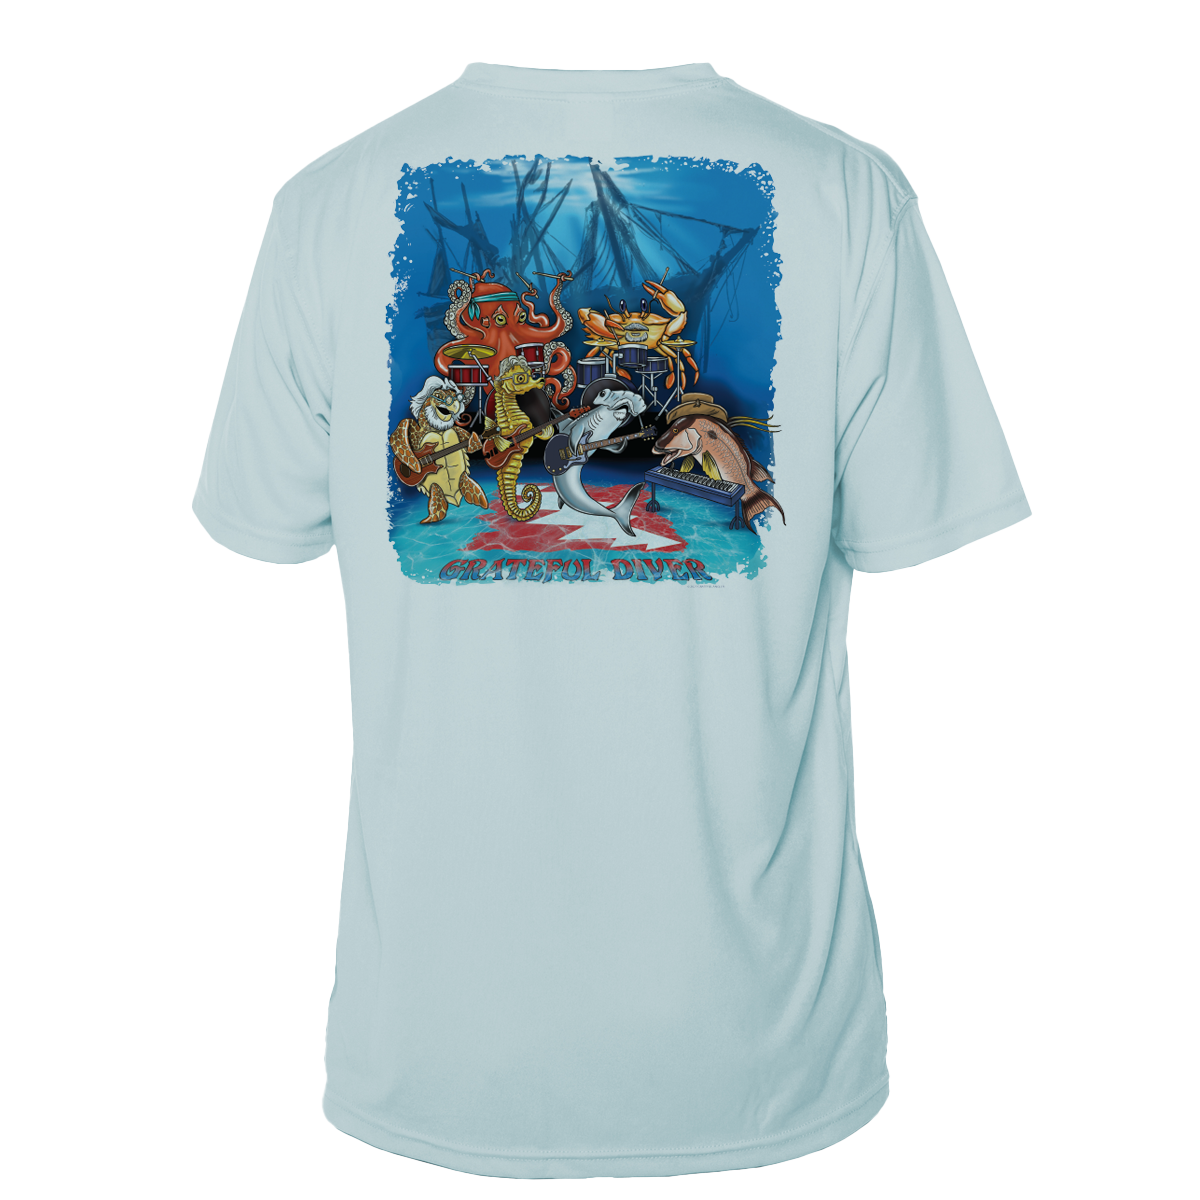 Grateful Diver Underwater Jam Short Sleeve UV Shirt